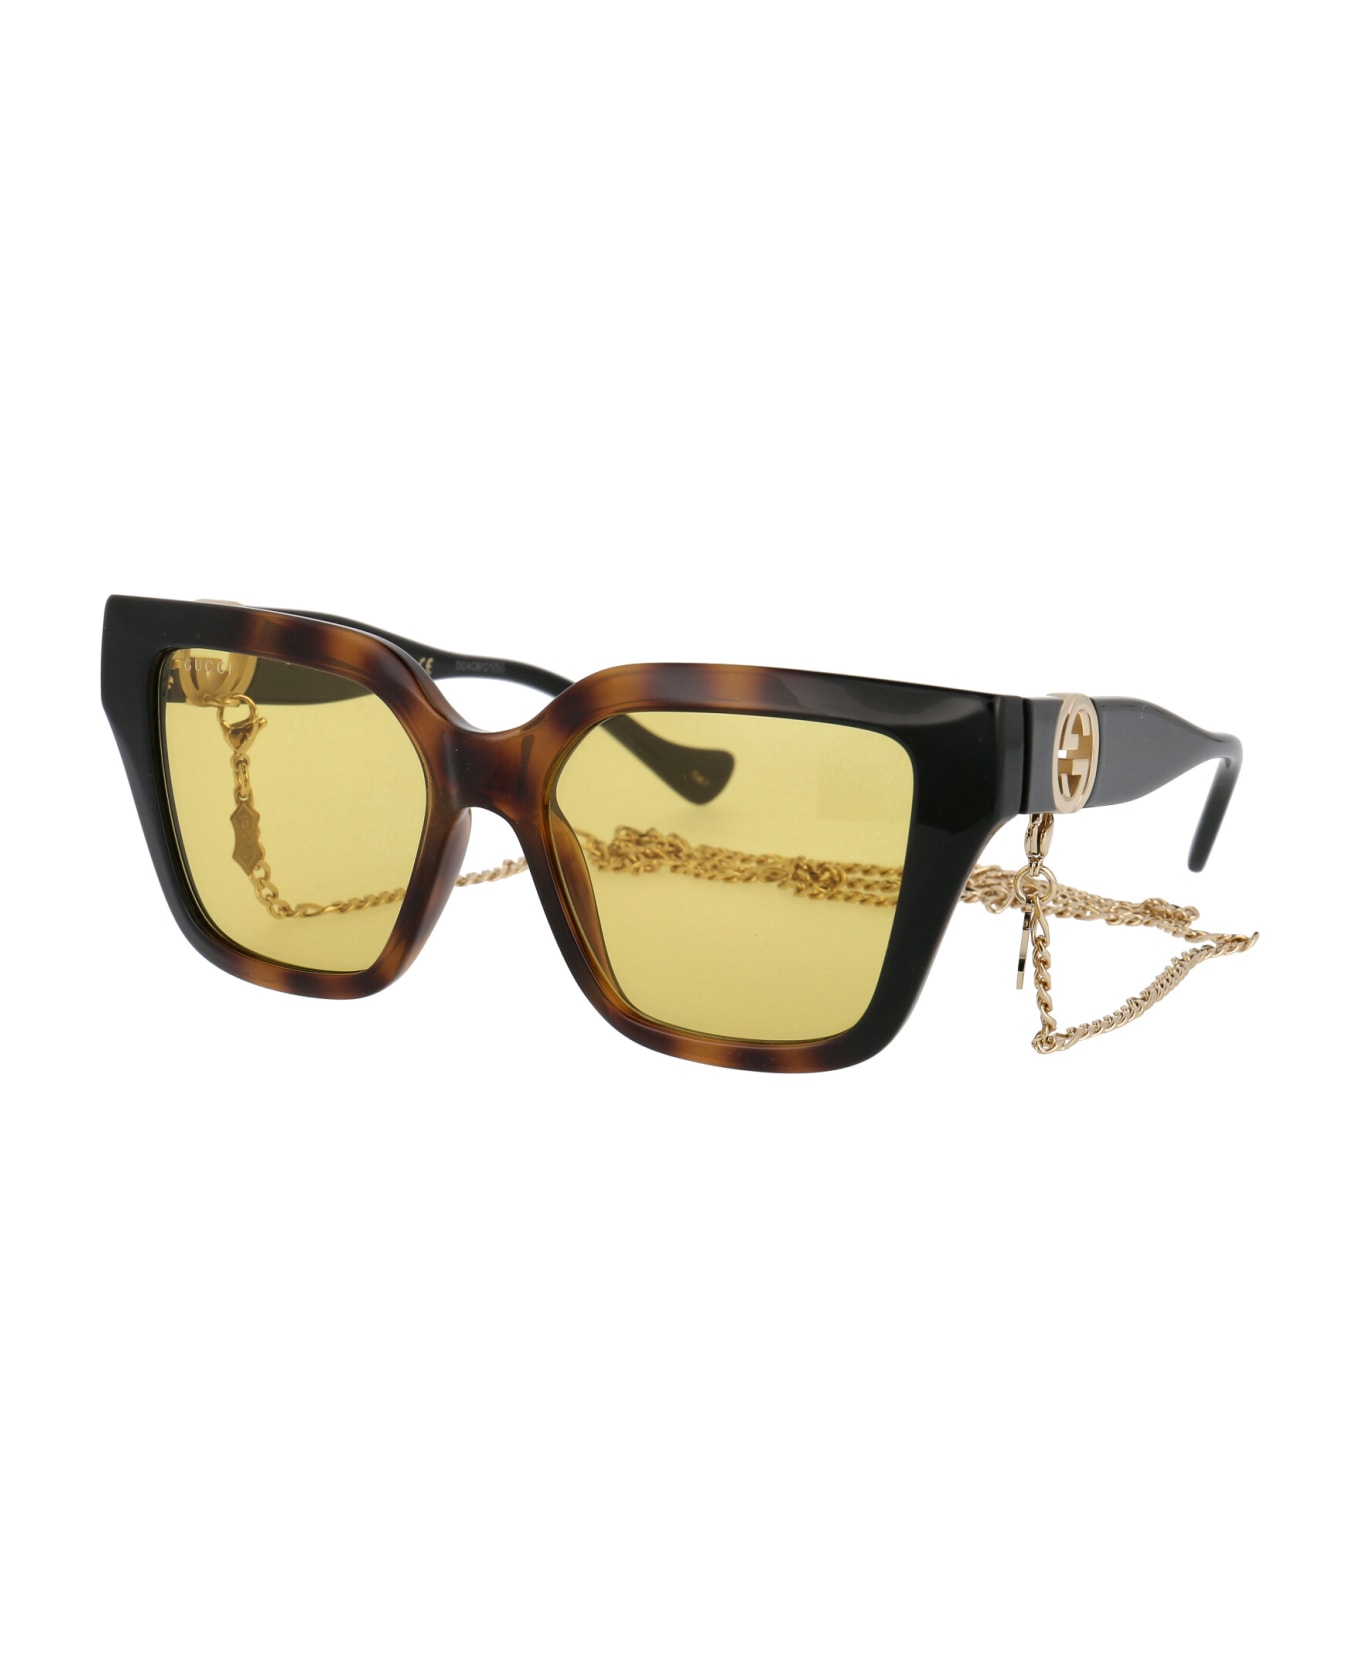 Gucci Eyewear Gg1023s Sunglasses - 004 HAVANA BLACK YELLOW サングラス